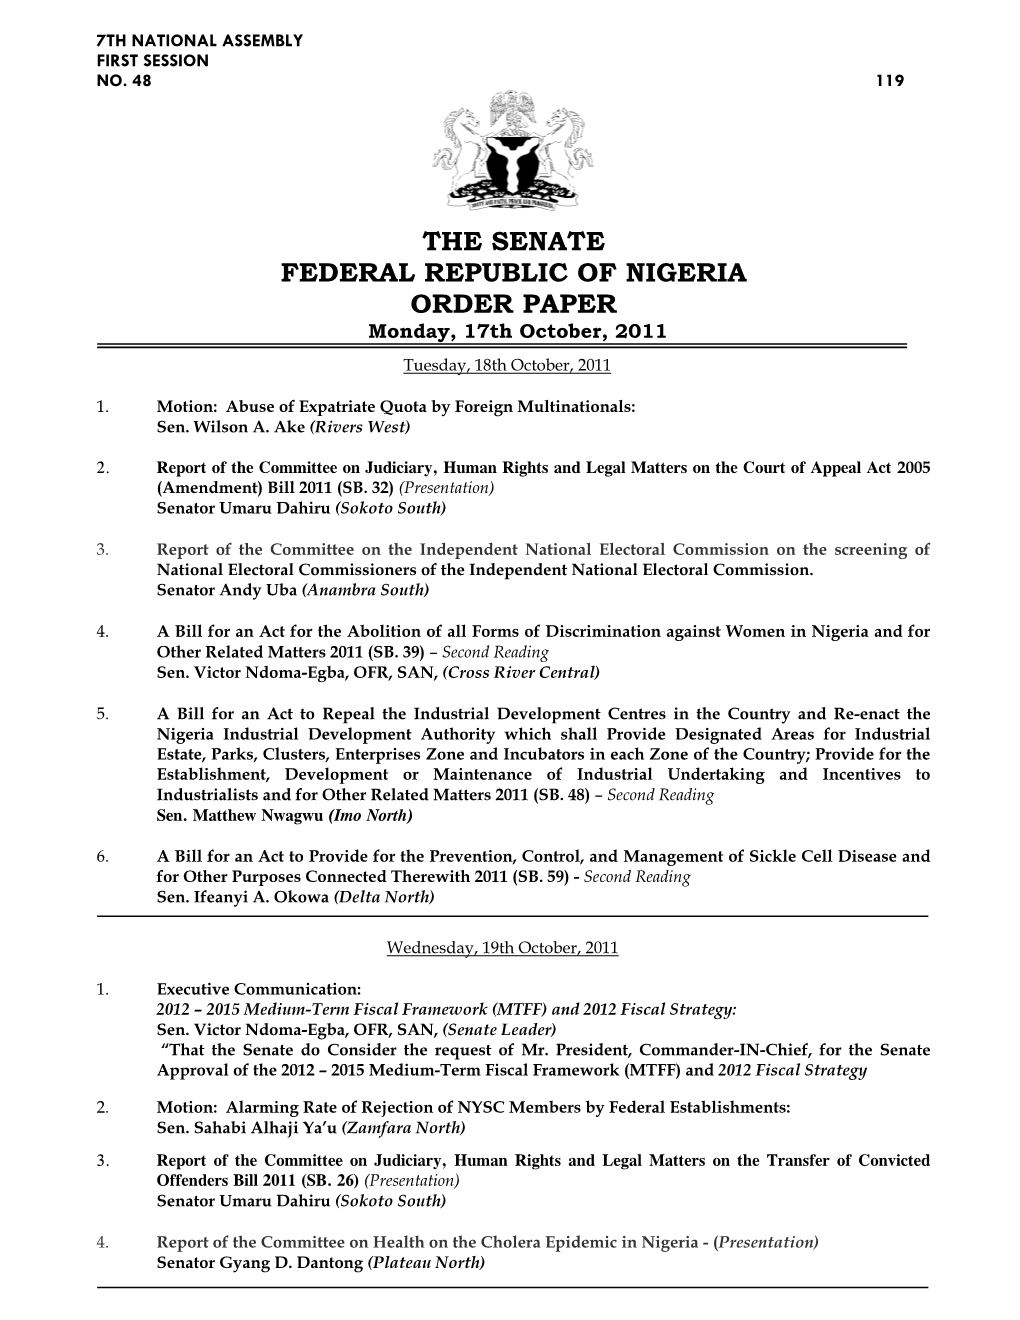 THE SENATE FEDERAL REPUBLIC of NIGERIA ORDER PAPER Monday, 17Th October, 2011